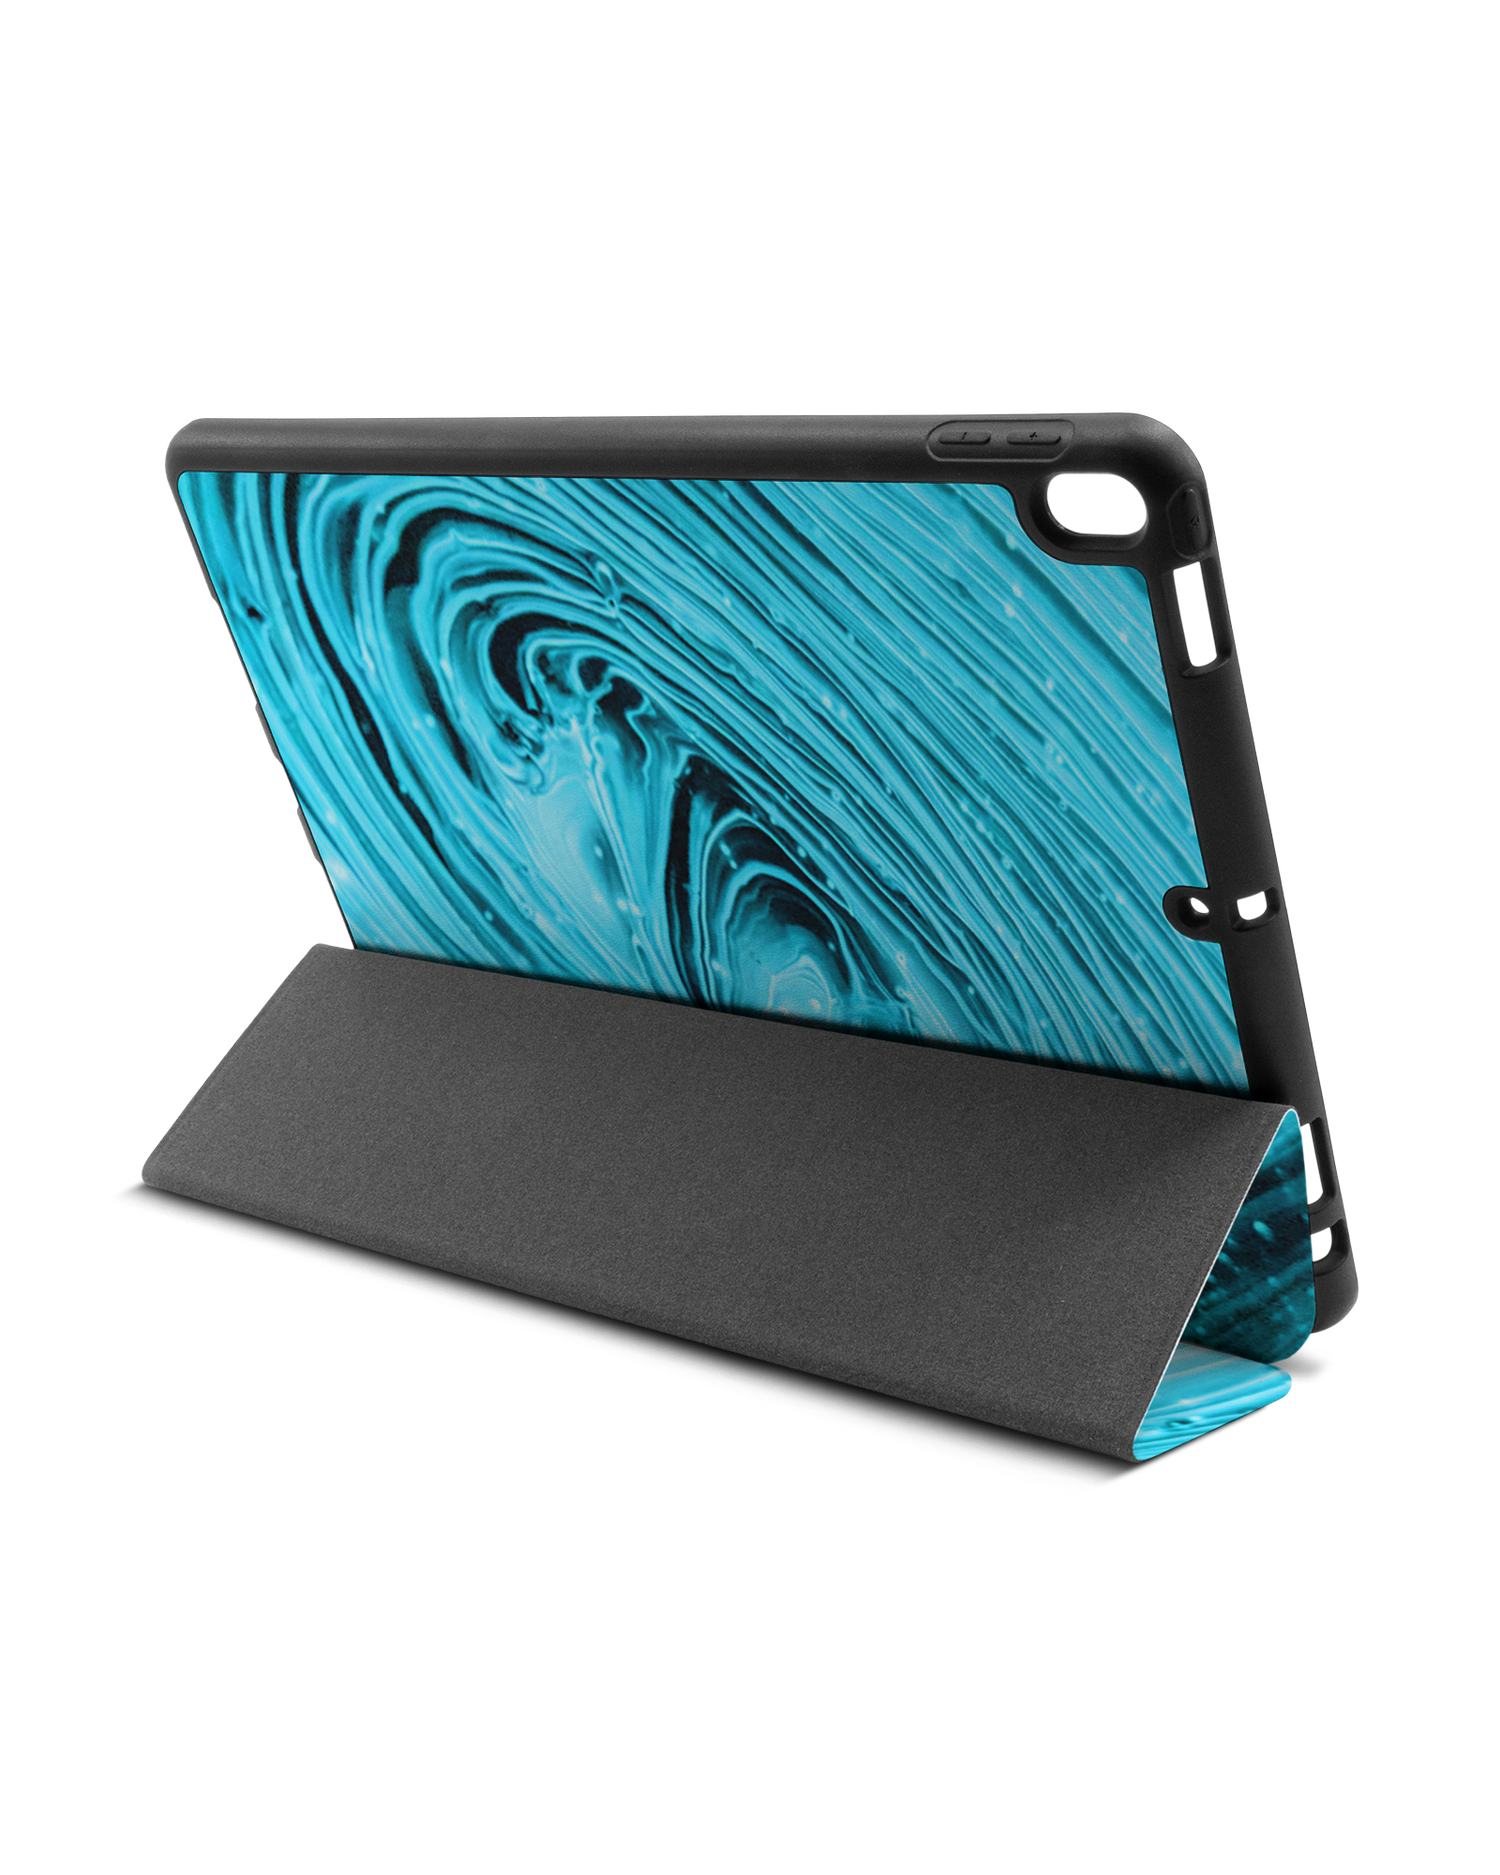 Turquoise Ripples iPad Case with Pencil Holder Apple iPad Pro 10.5